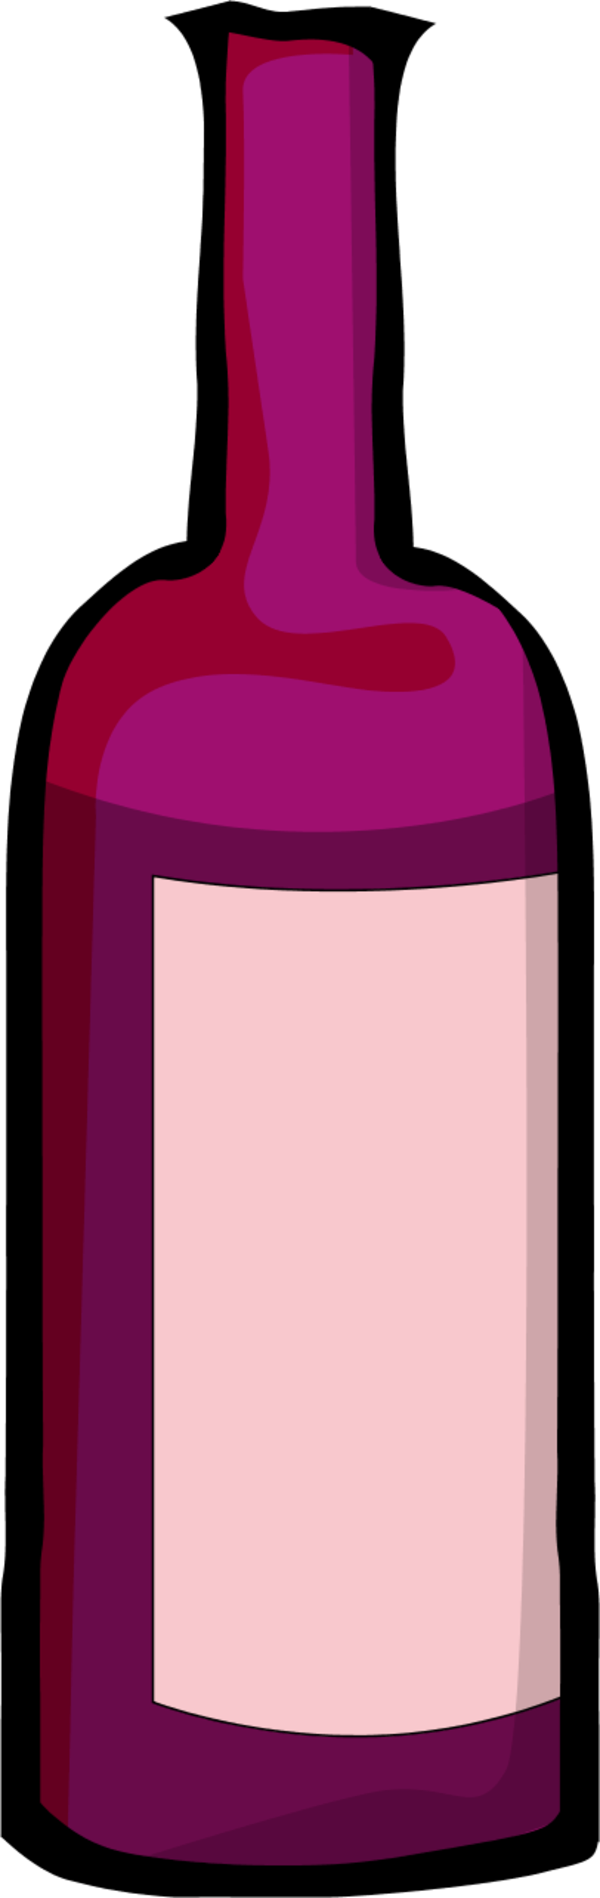 Wine bottle label clipart